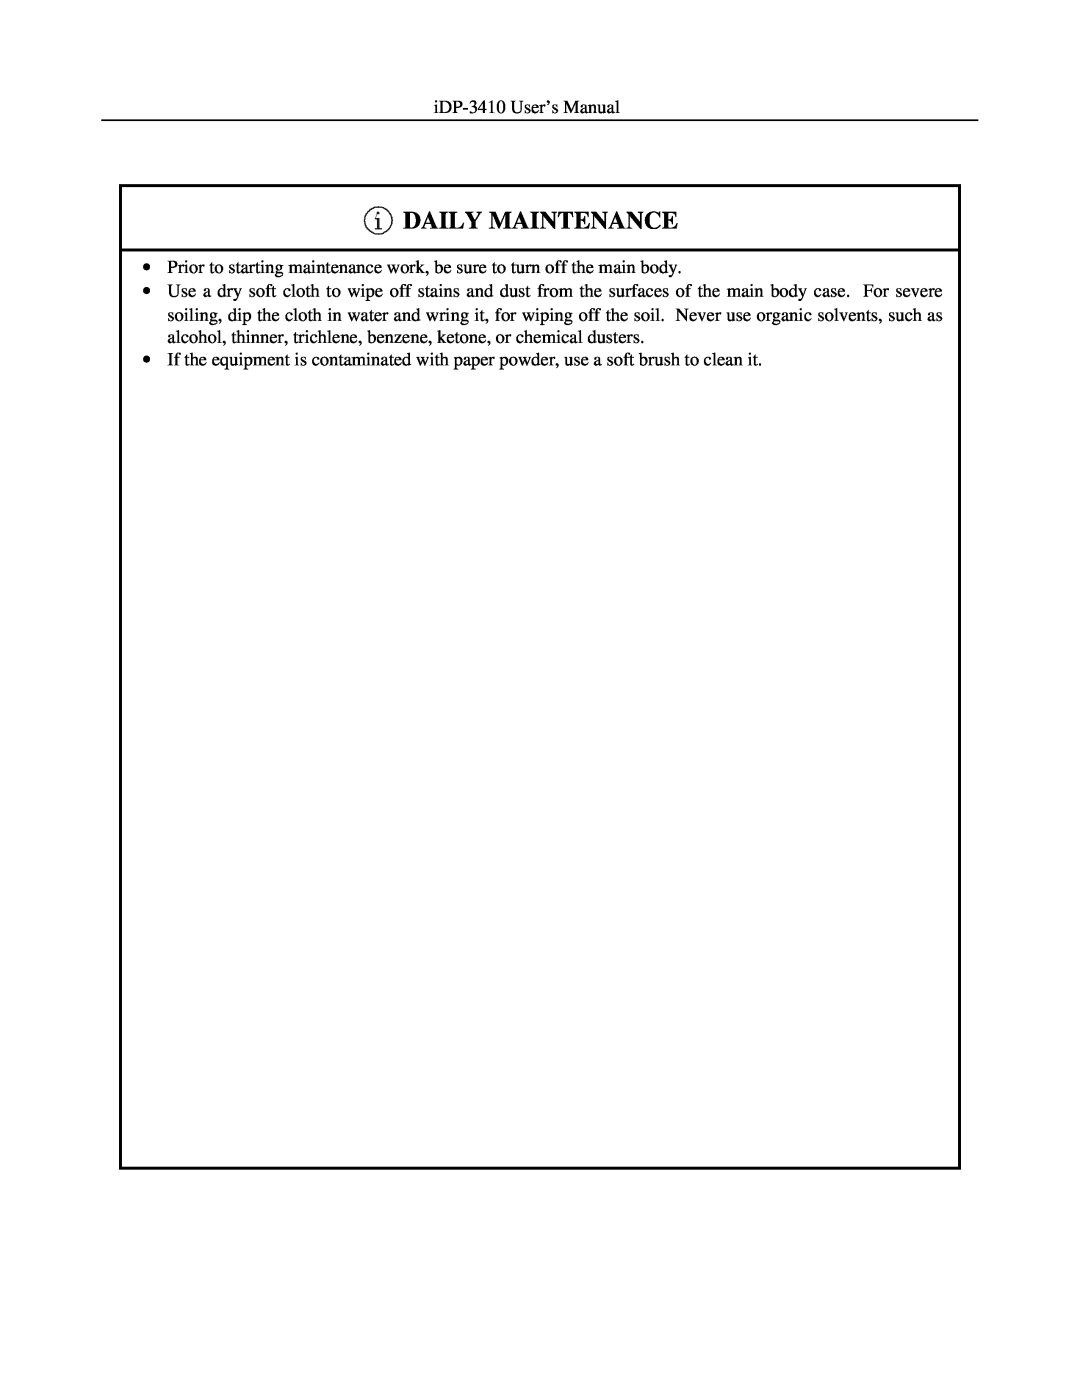 Addlogix iDP-3410 user manual Daily Maintenance 